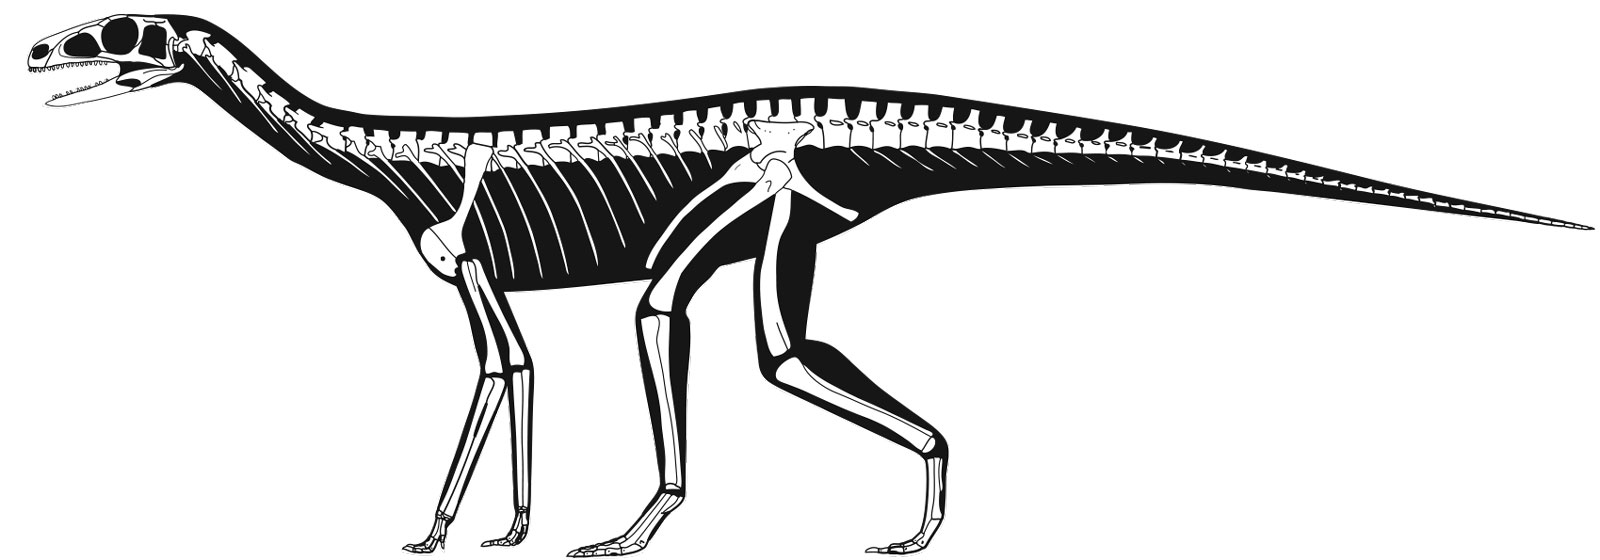 A computer drawing of a Asilisaurus kongwe dinosaur skeleton